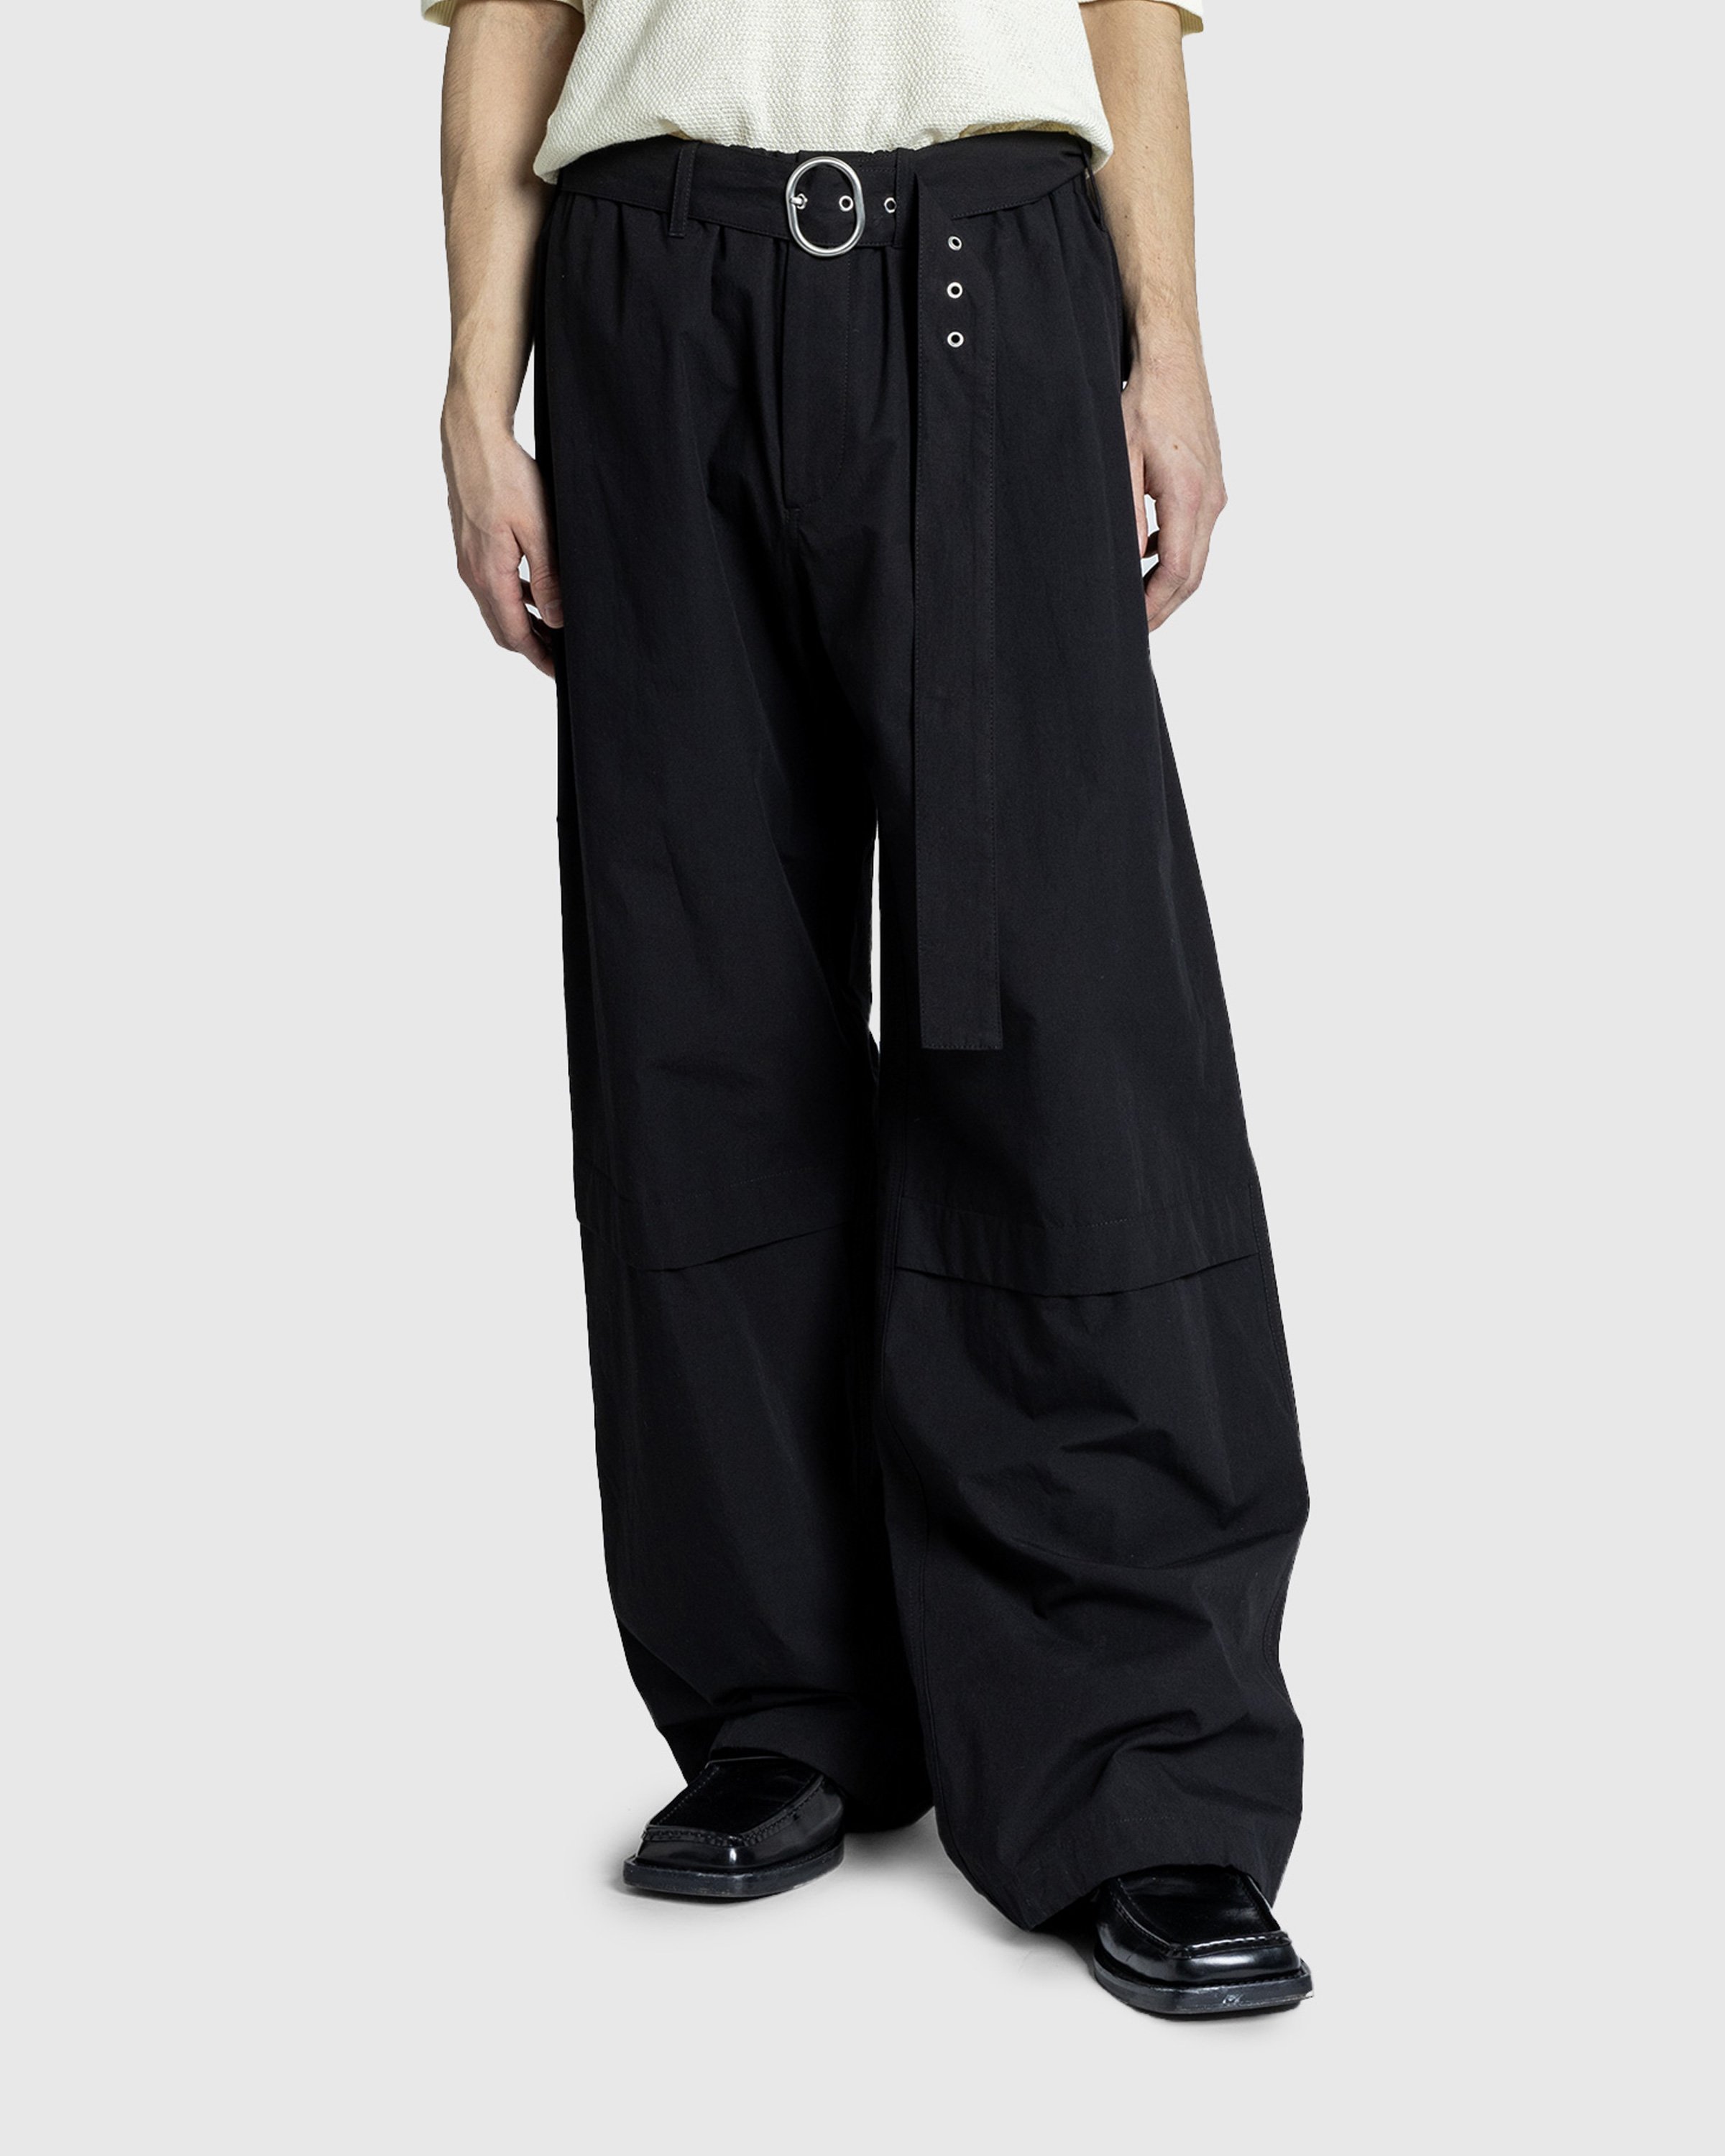 Jil Sander - Trouser 93 - Clothing - Black - Image 2